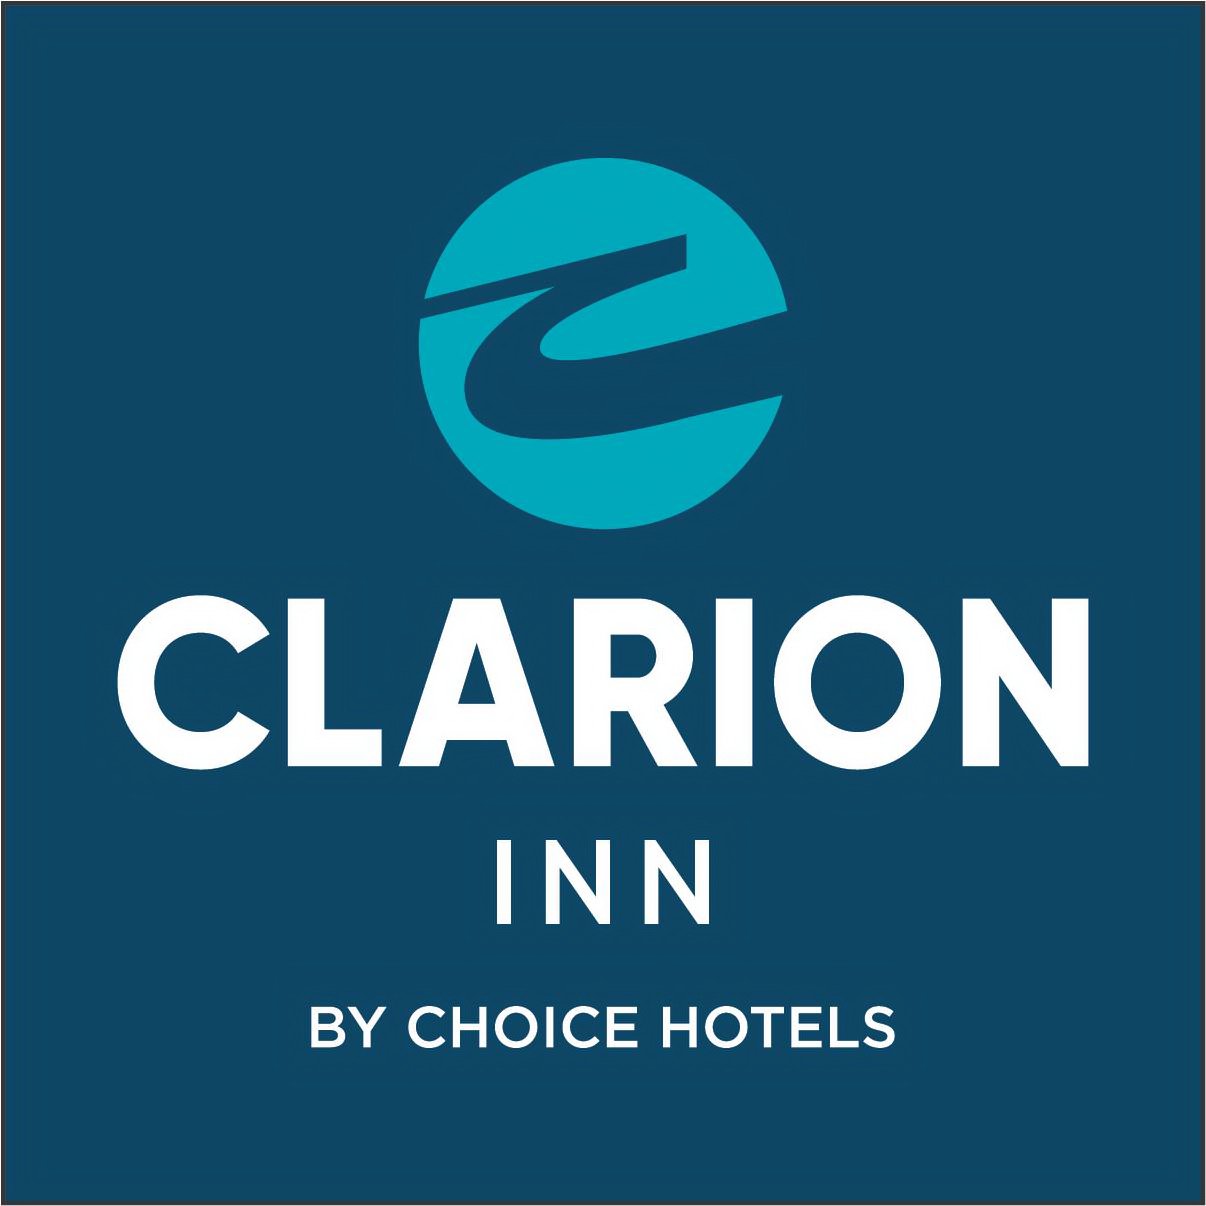  C CLARION INN BY CHOICE HOTELS